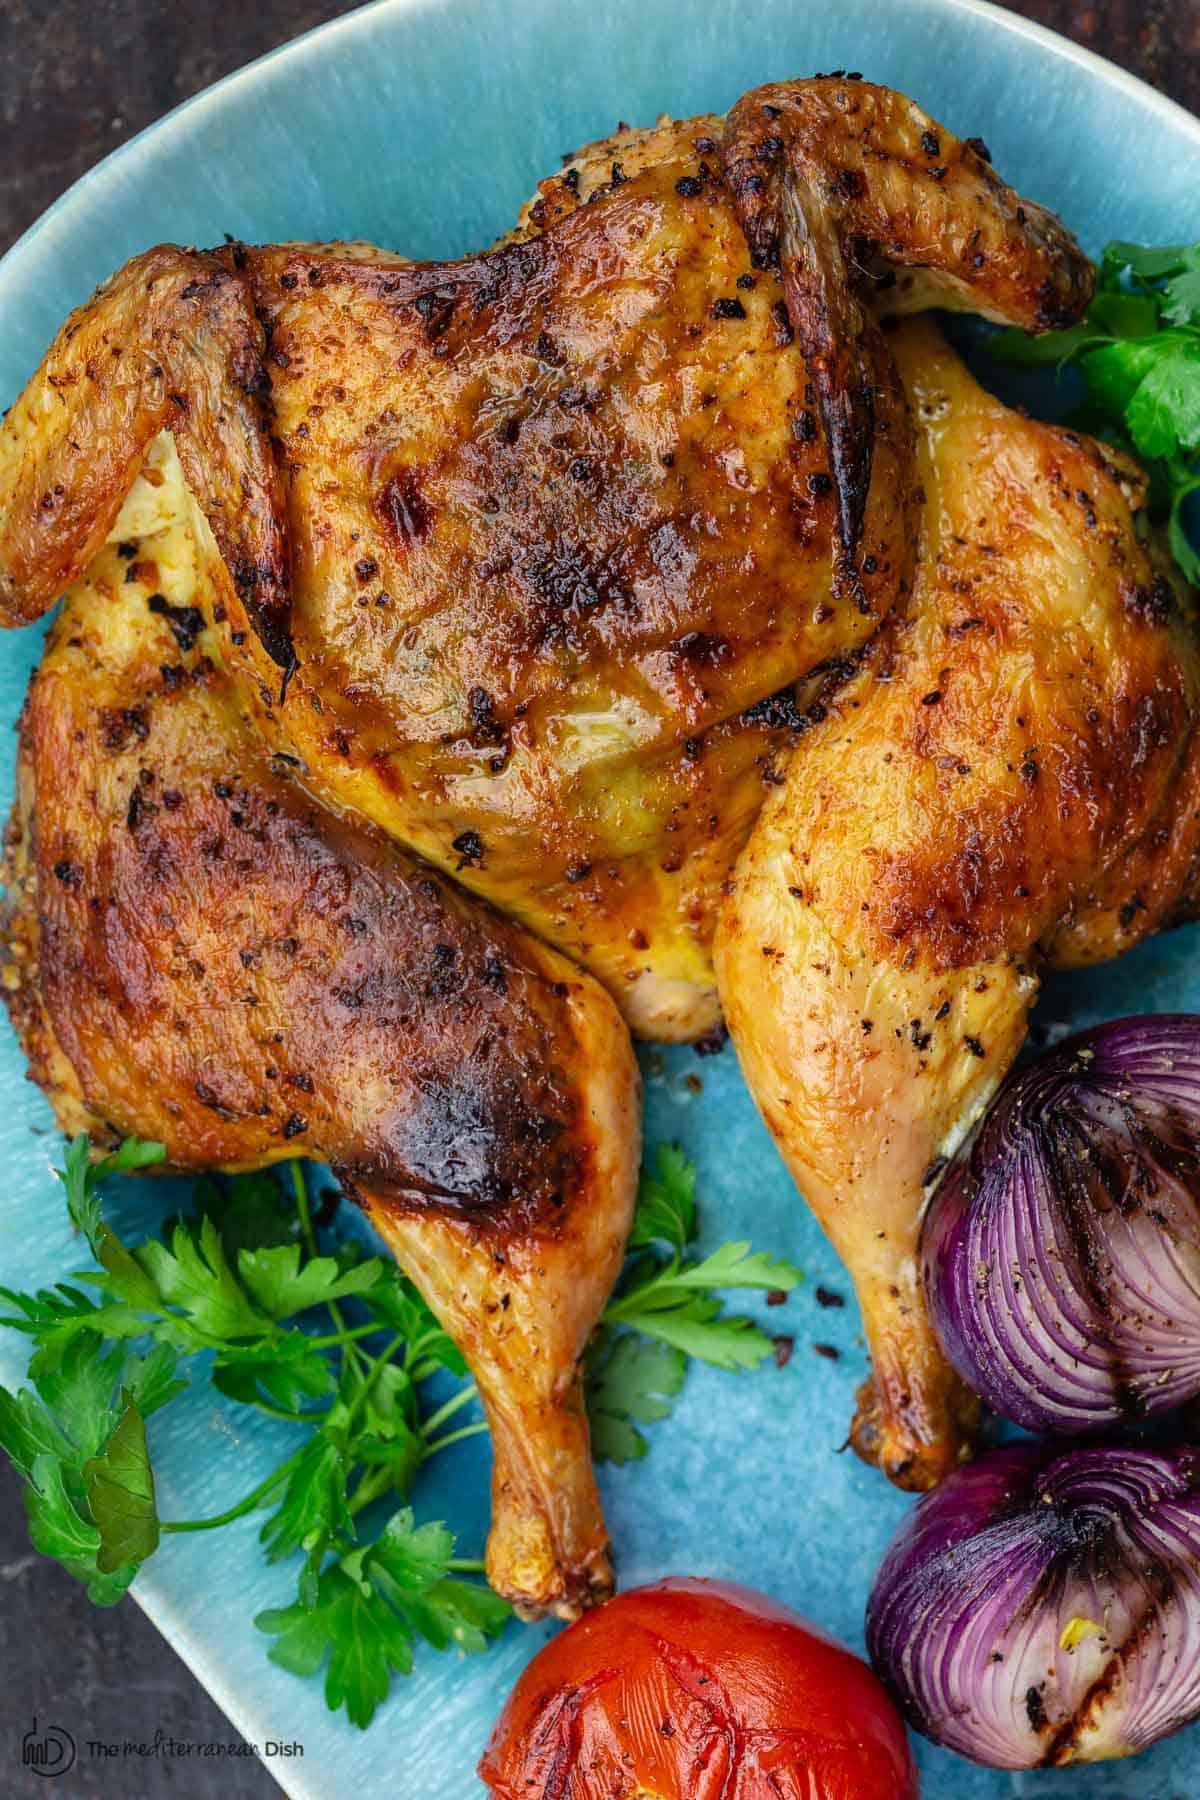 https://www.themediterraneandish.com/wp-content/uploads/2020/07/grilled-whole-chicken-recipe-10.jpg